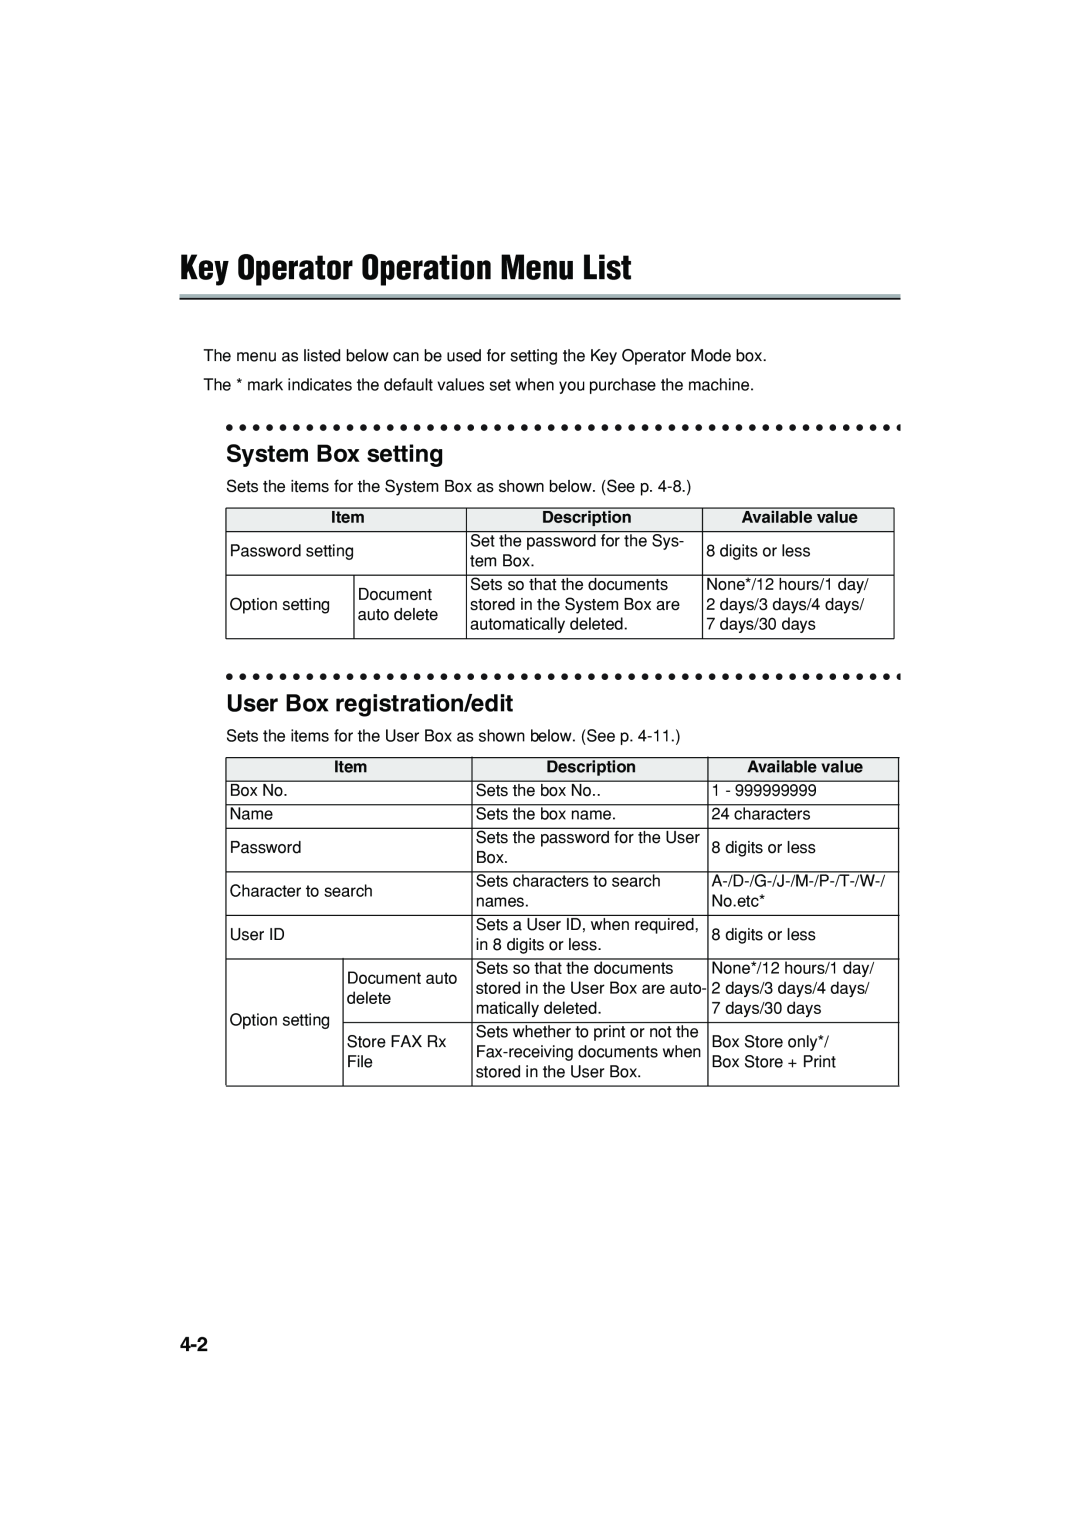 Konica Minolta 7222 manual Key Operator Operation Menu List, System Box setting, User Box registration/edit, Description 